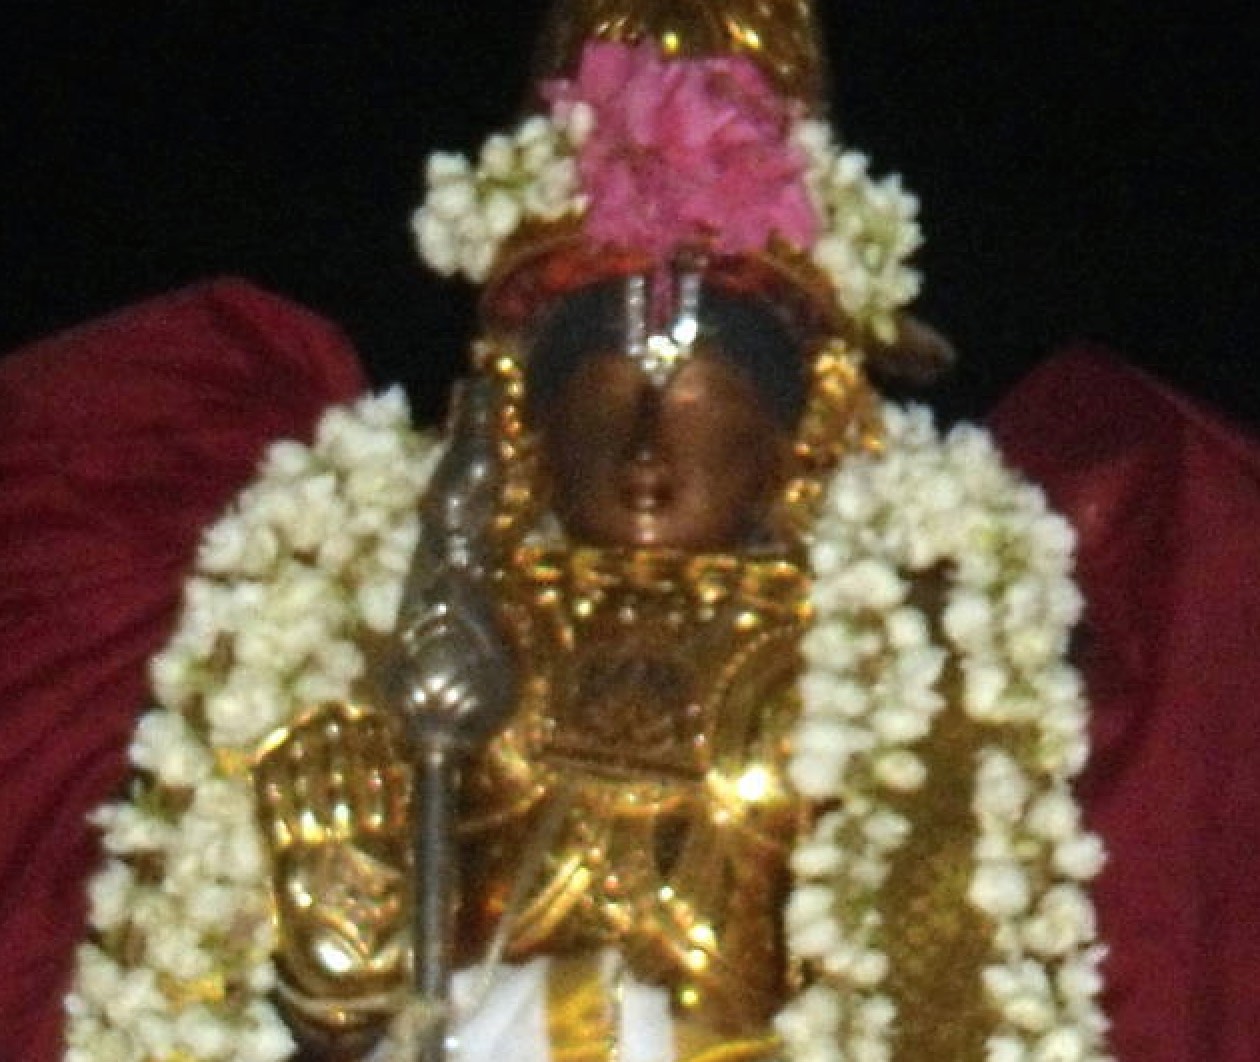 Thirukannamangai Sri Bhaktavatsala Perumal Aadi velli purappadu